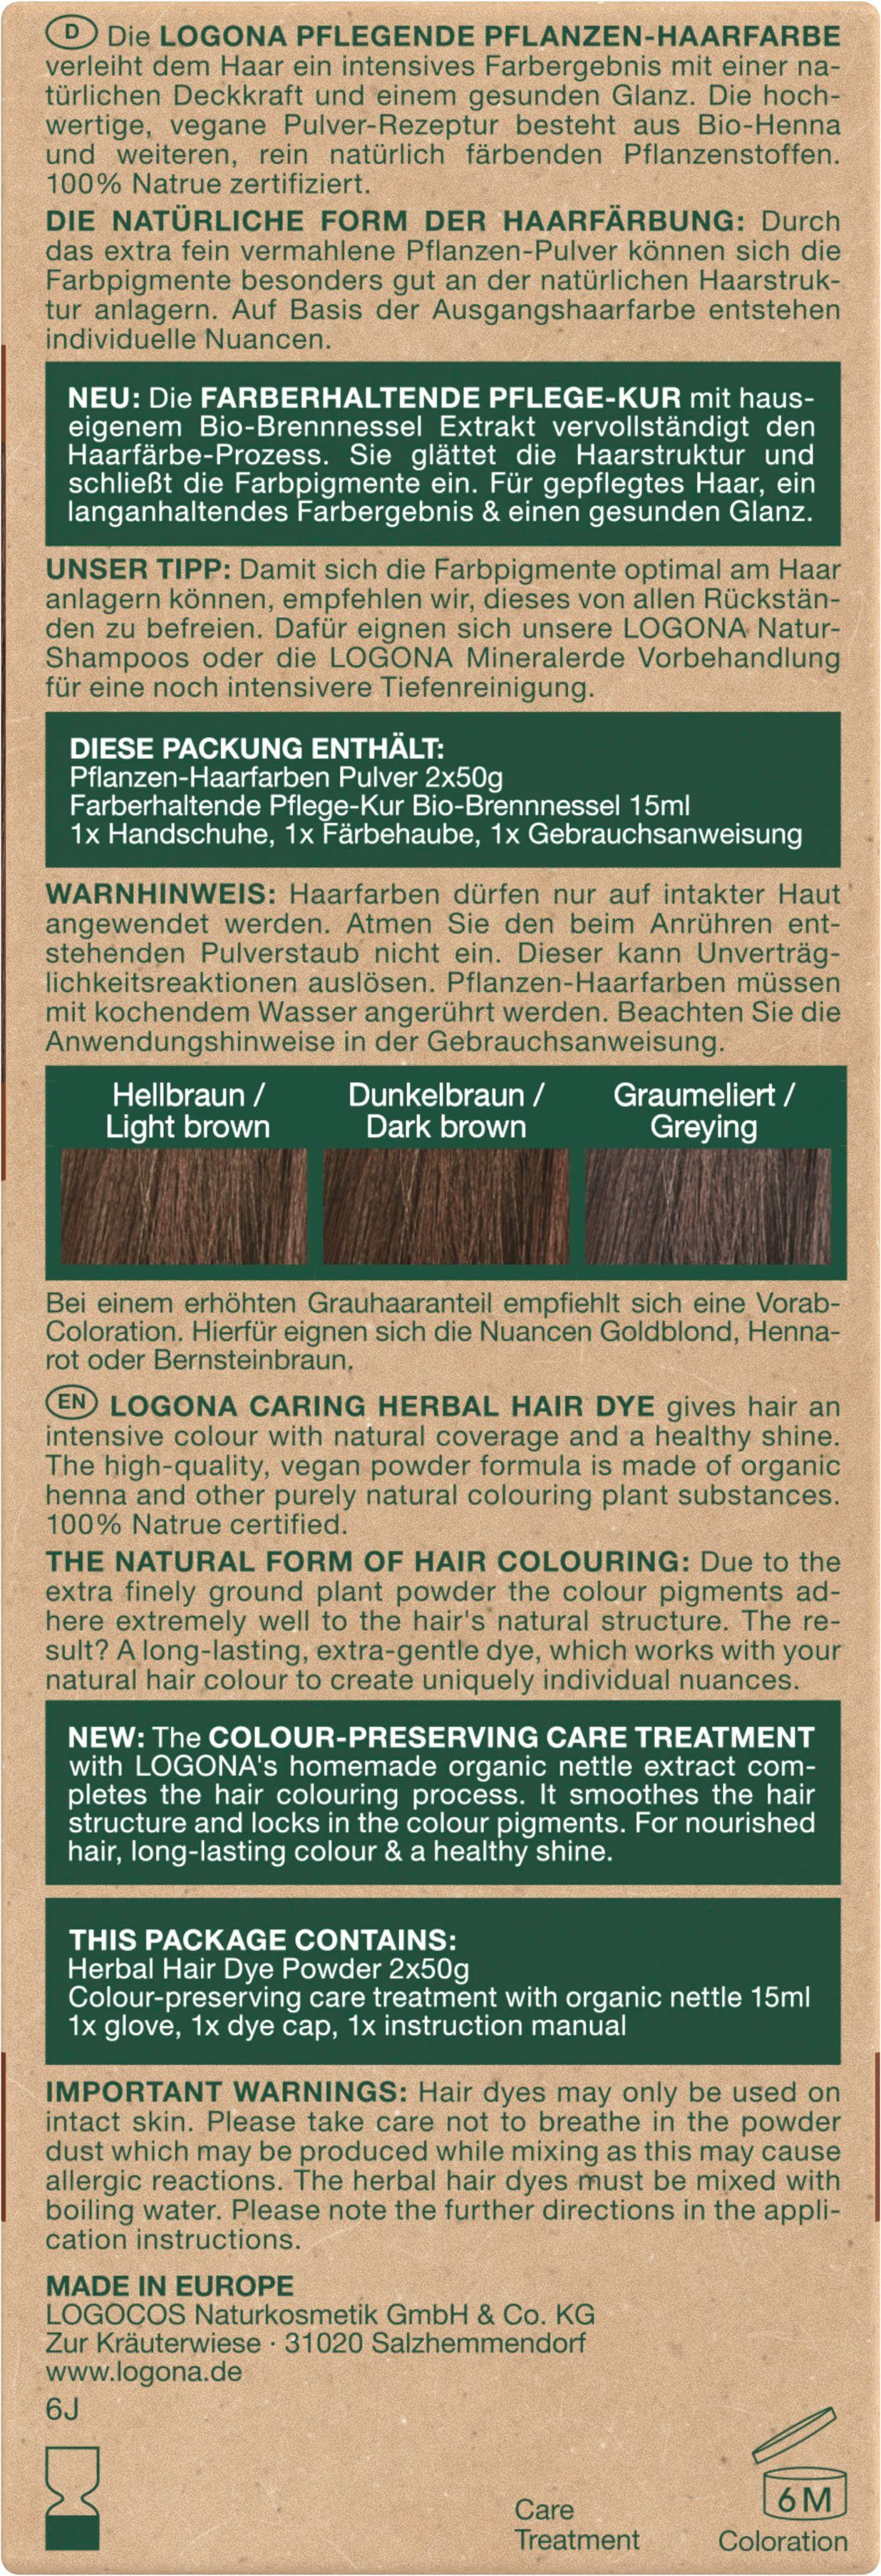 09 Schokobraun LOGONA Pflanzen-Haarfarbe Haarfarbe Pulver